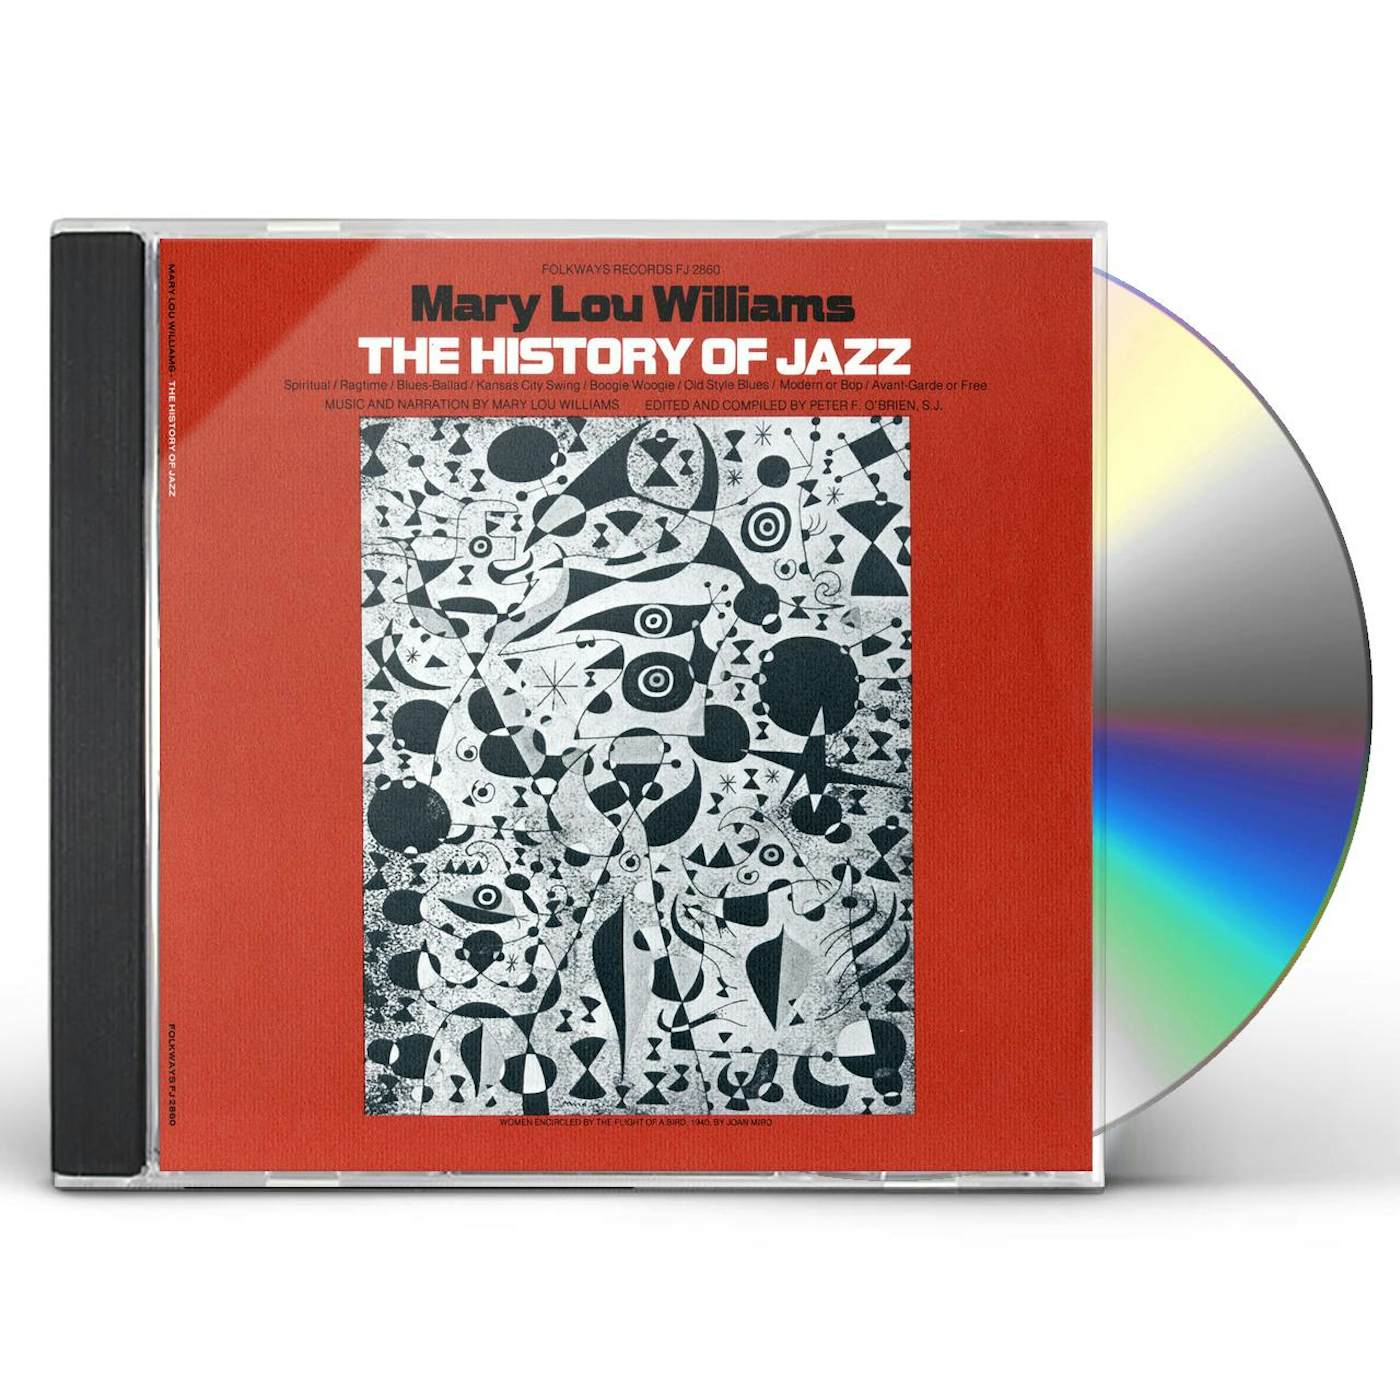 Mary Lou Williams THE HISTORY OF JAZZ CD